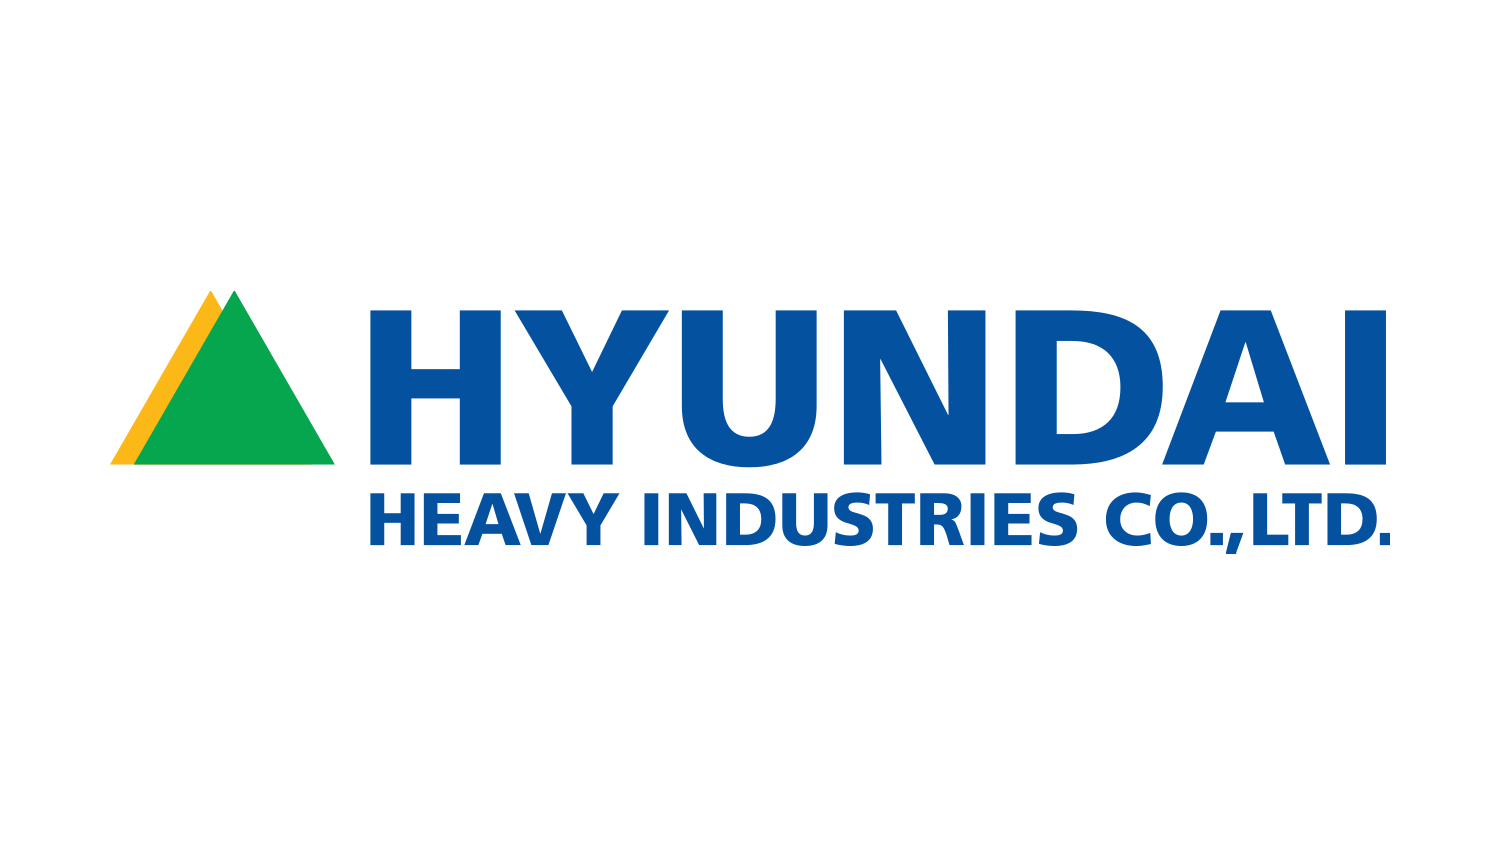 Hyundai heavy industries